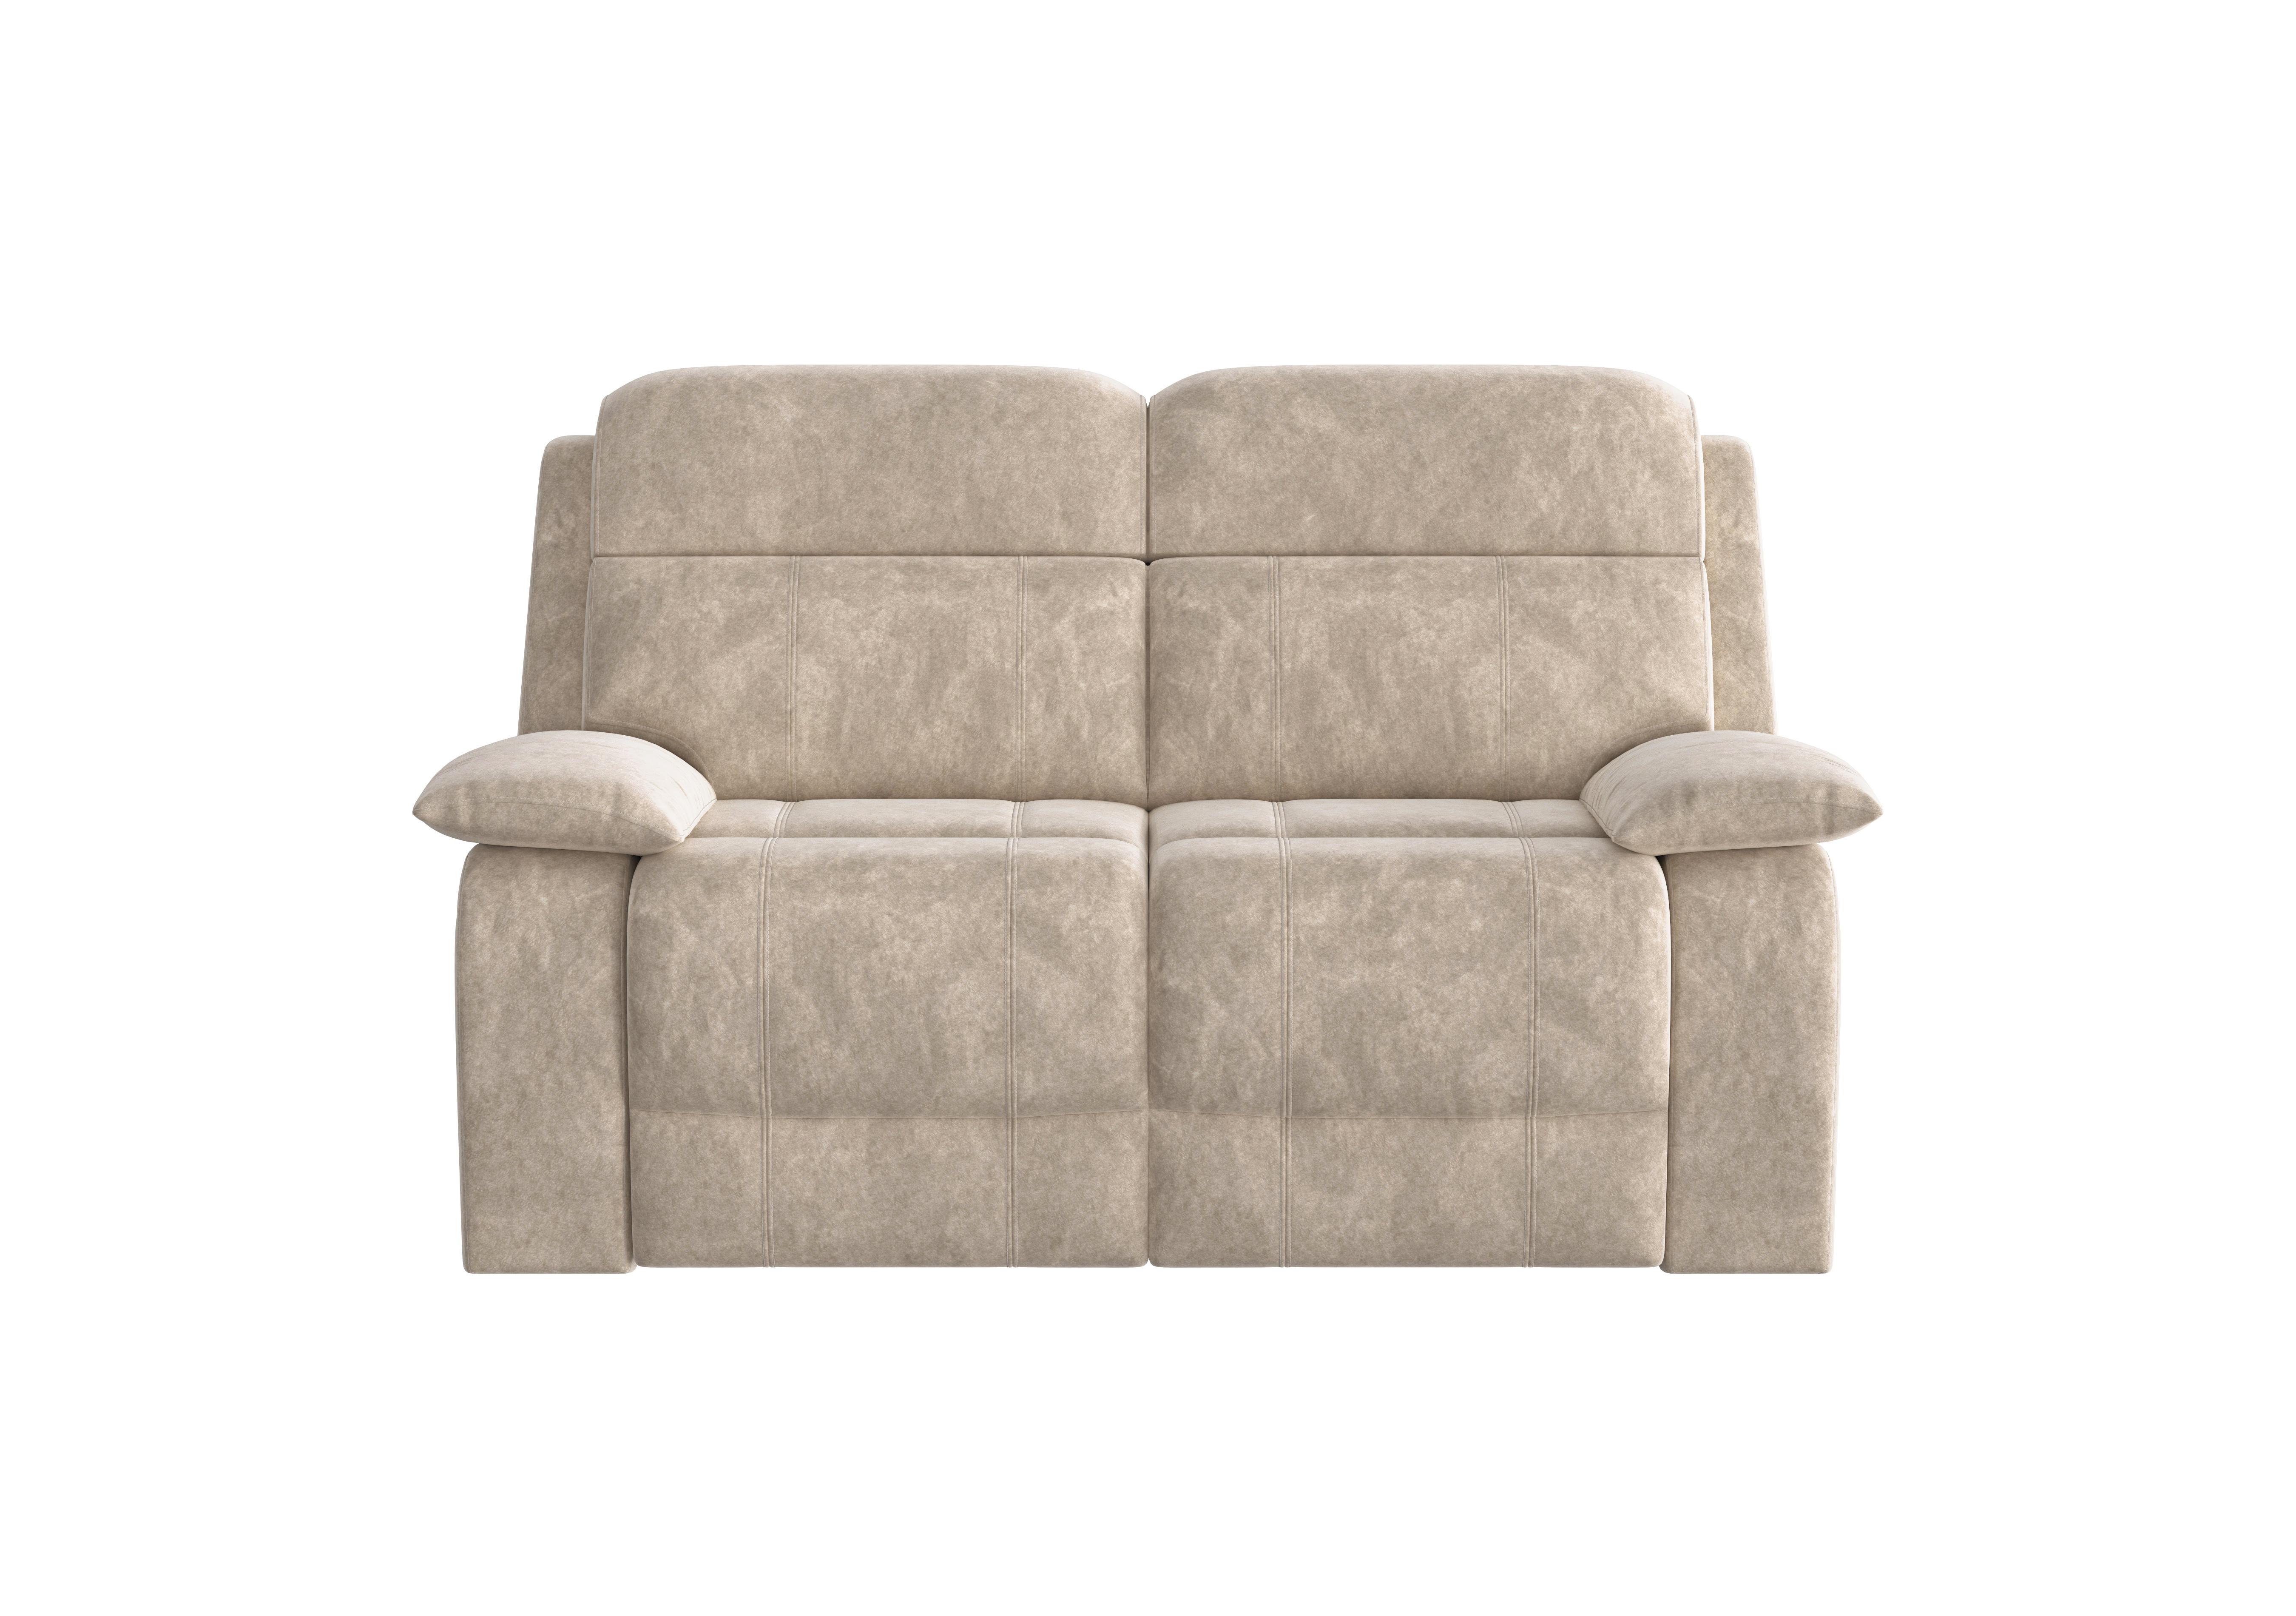 Moreno 2 Seater Fabric Sofa in Bfa-Bnn-R26 Cream on Furniture Village